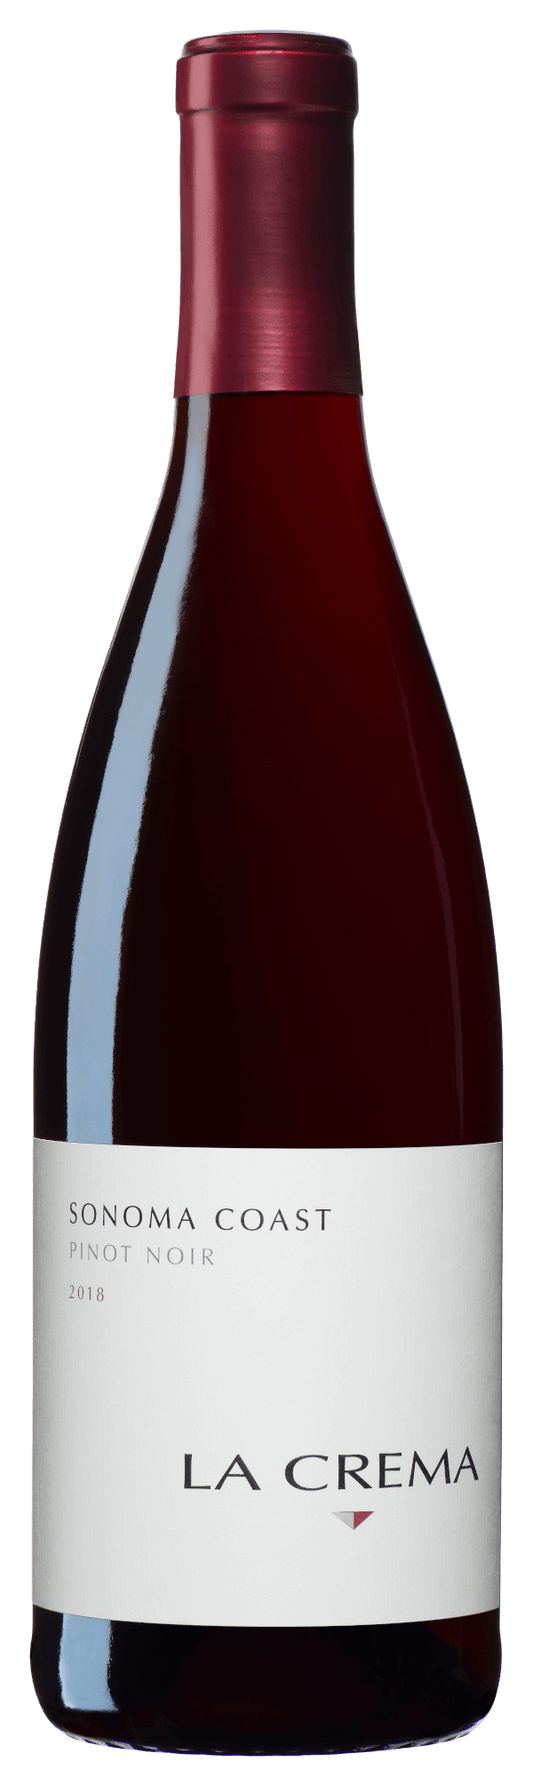 La Crema Sonoma Coast Pinot Noir 2019 (1x75cl) - TwoMoreGlasses.com